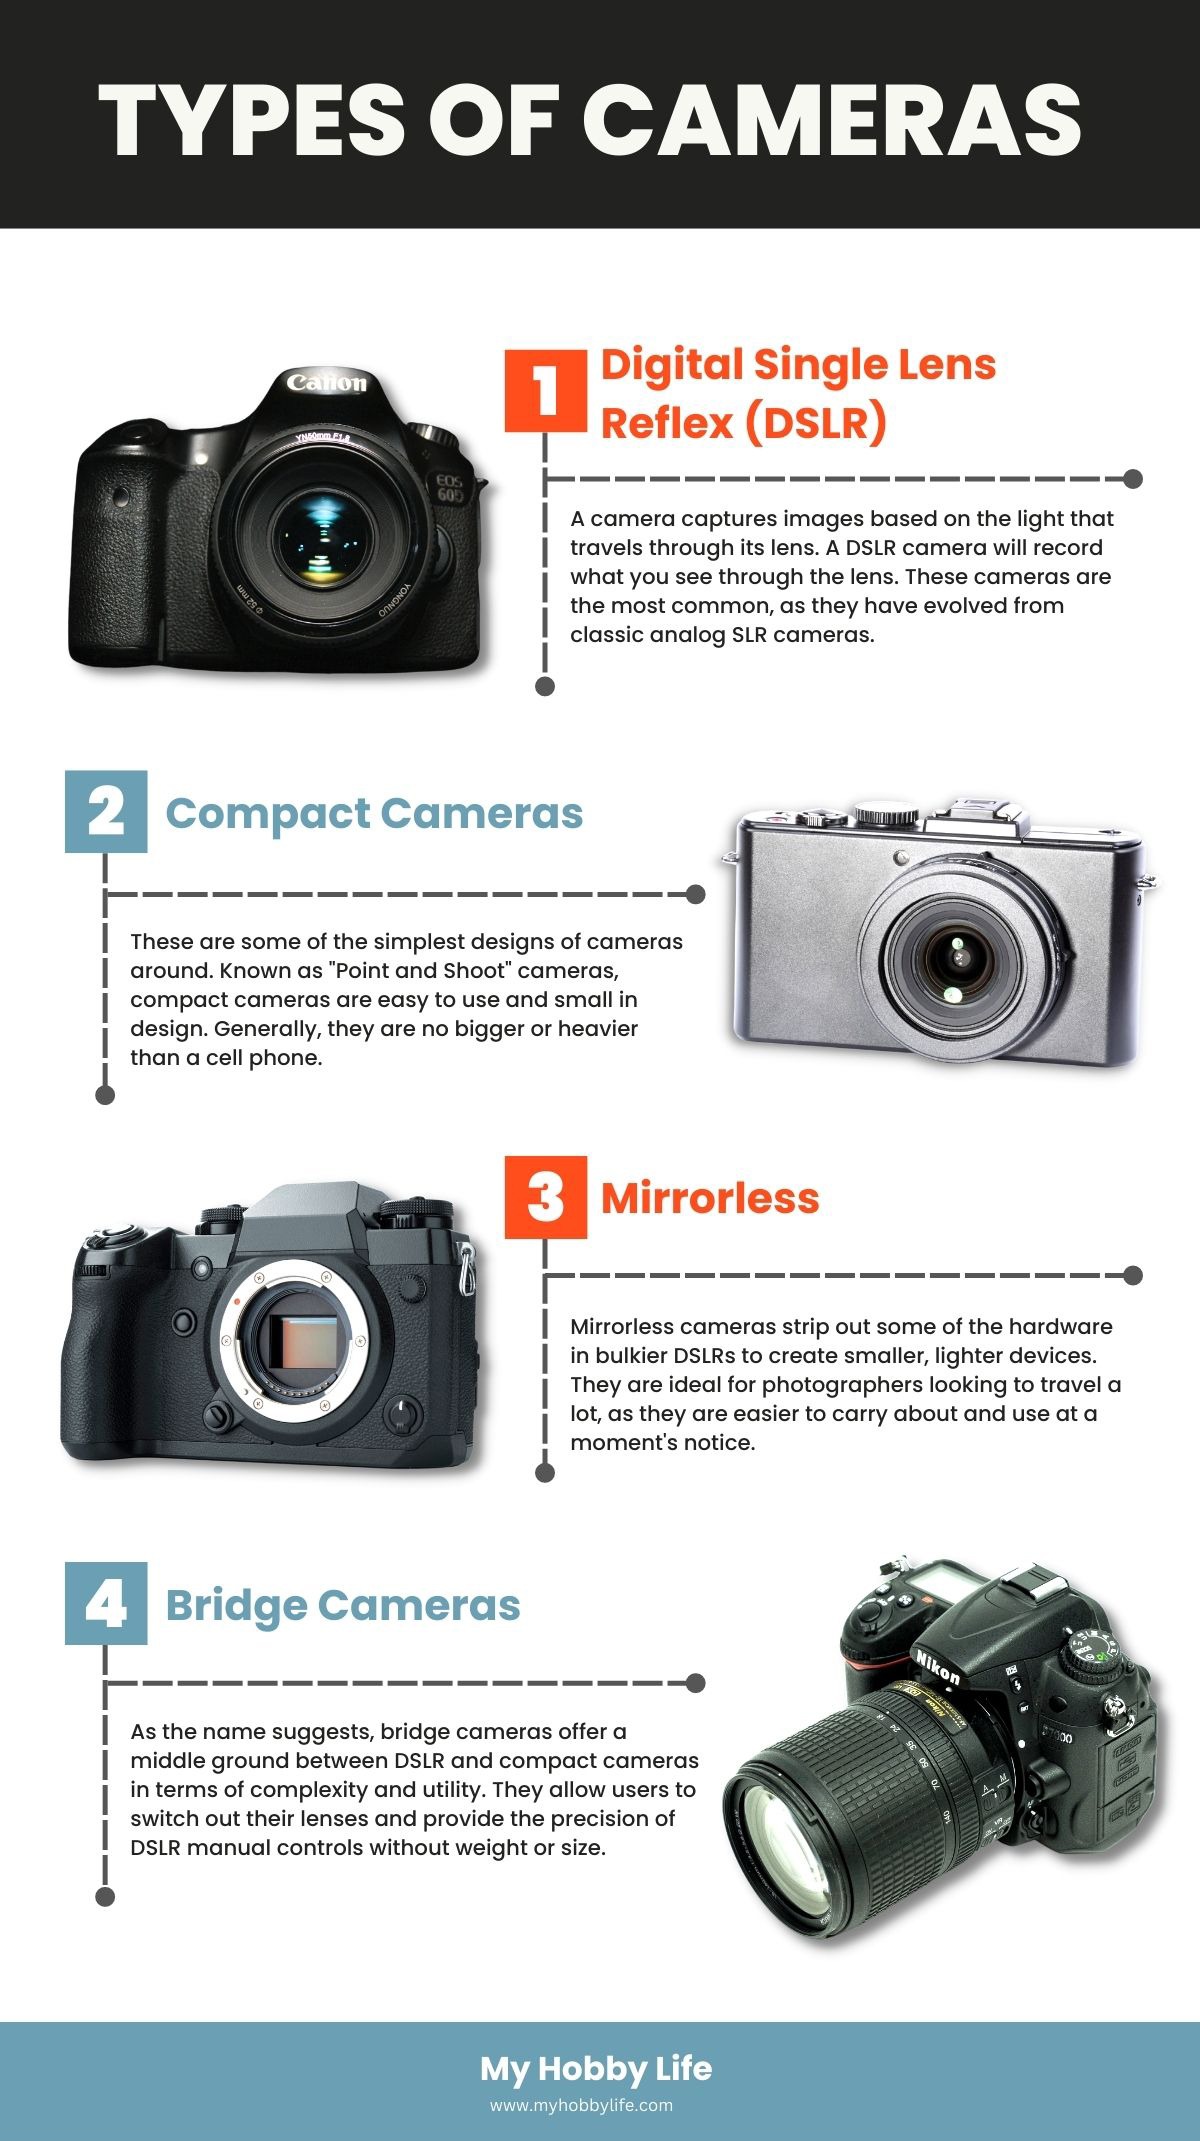 Types of cameras